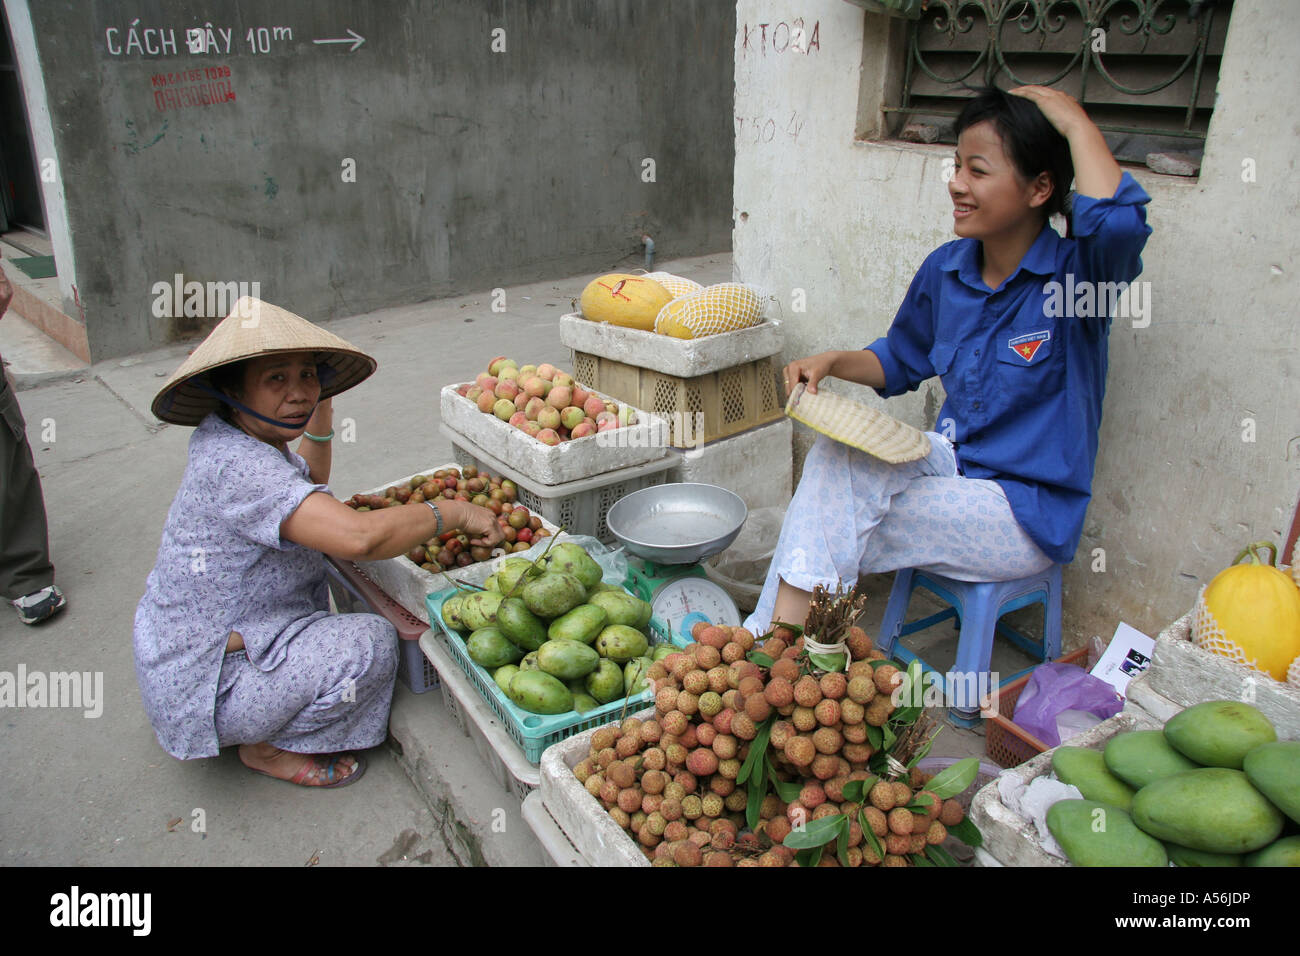 iy8663 vietnam woman selling lychees mangoes bananas hanoi photo 2005 Stock Photo